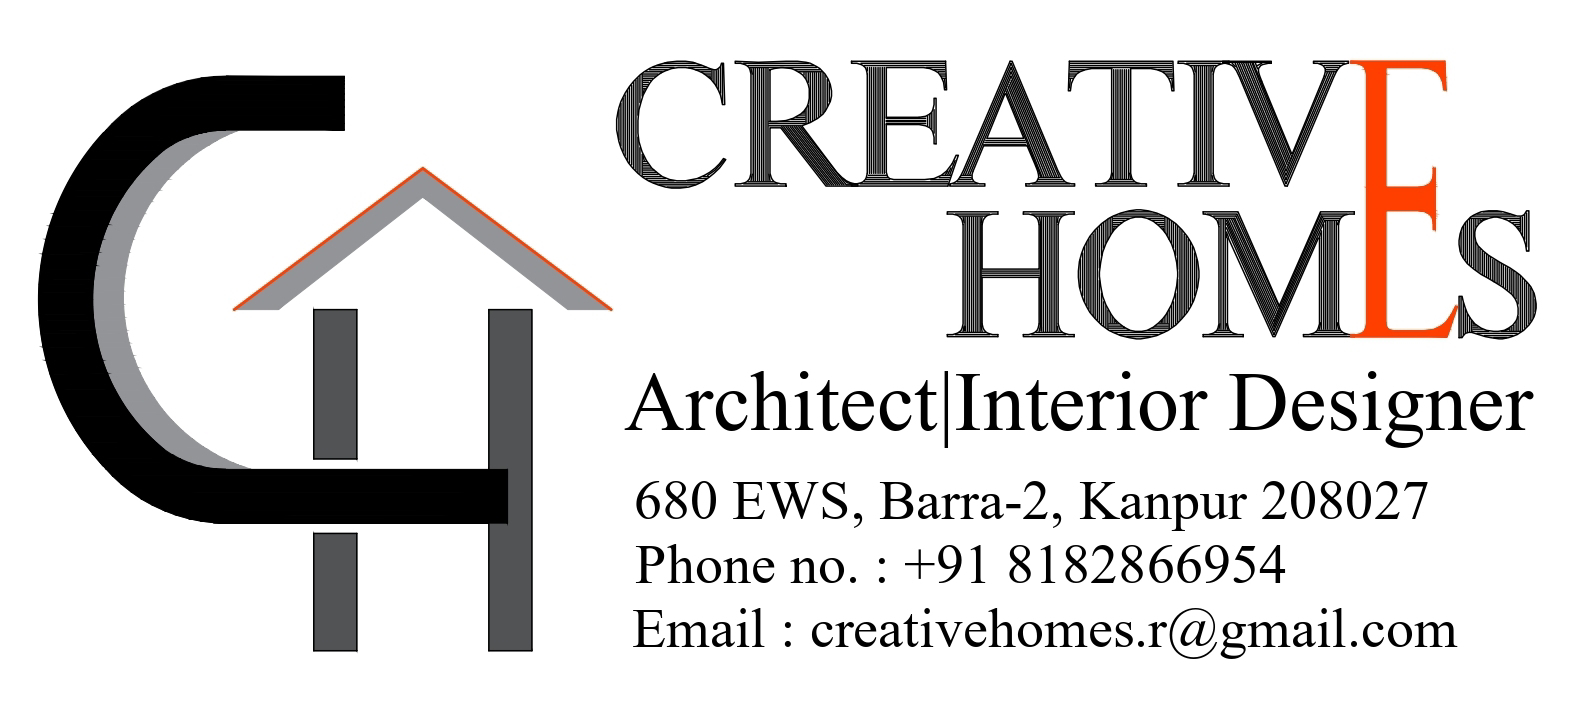 Creative Homes - Architect | Interior Designer|Legal Services|Professional Services